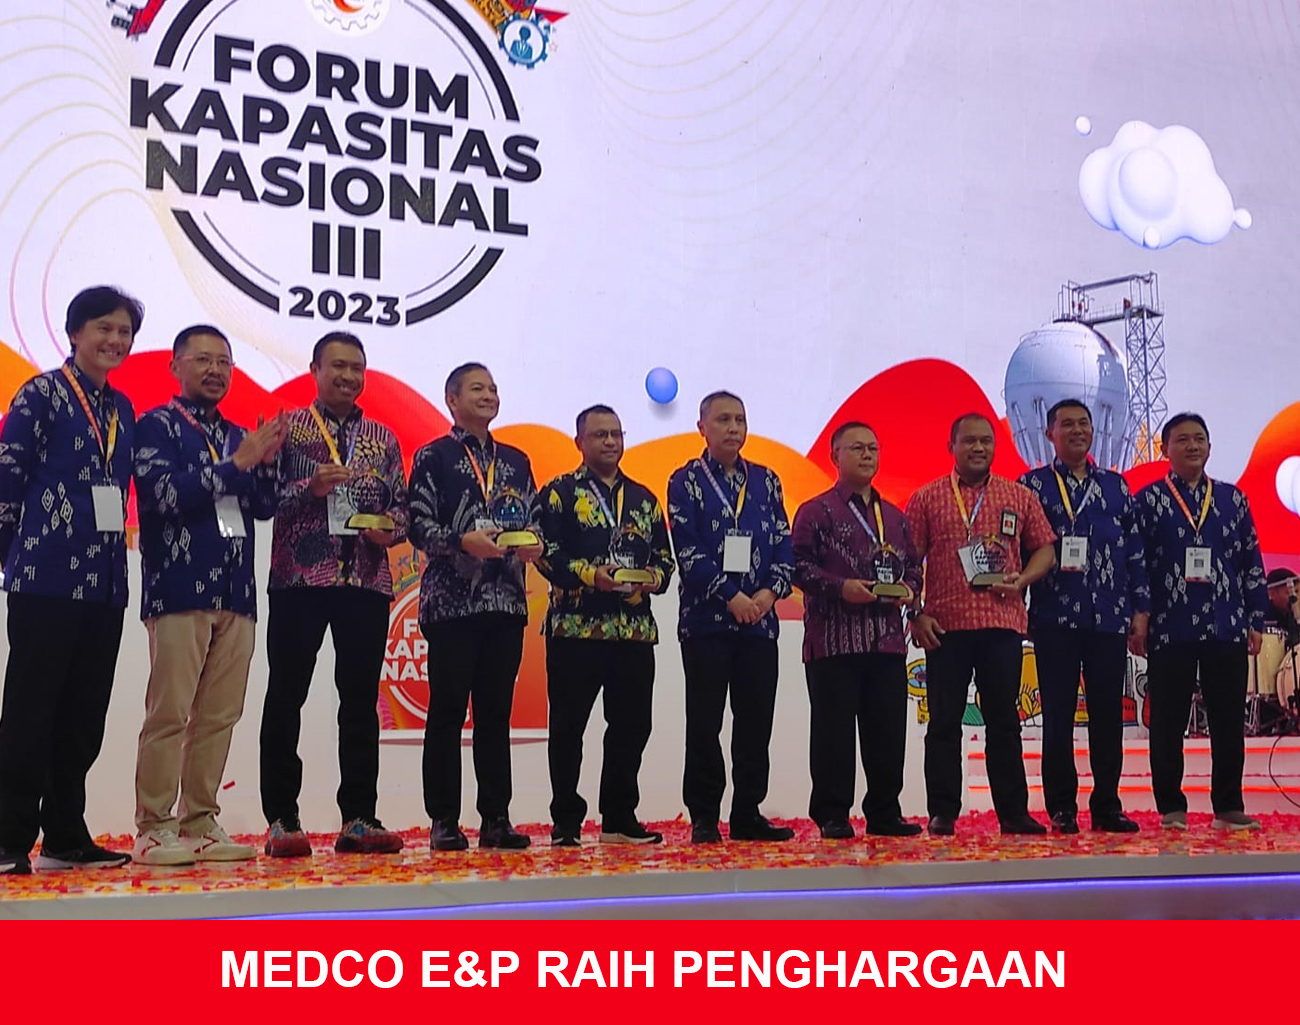 Medco E&P Raih Penghargaan The Highest TKDN for Cost Recovery 2023 dari SKK Migas 